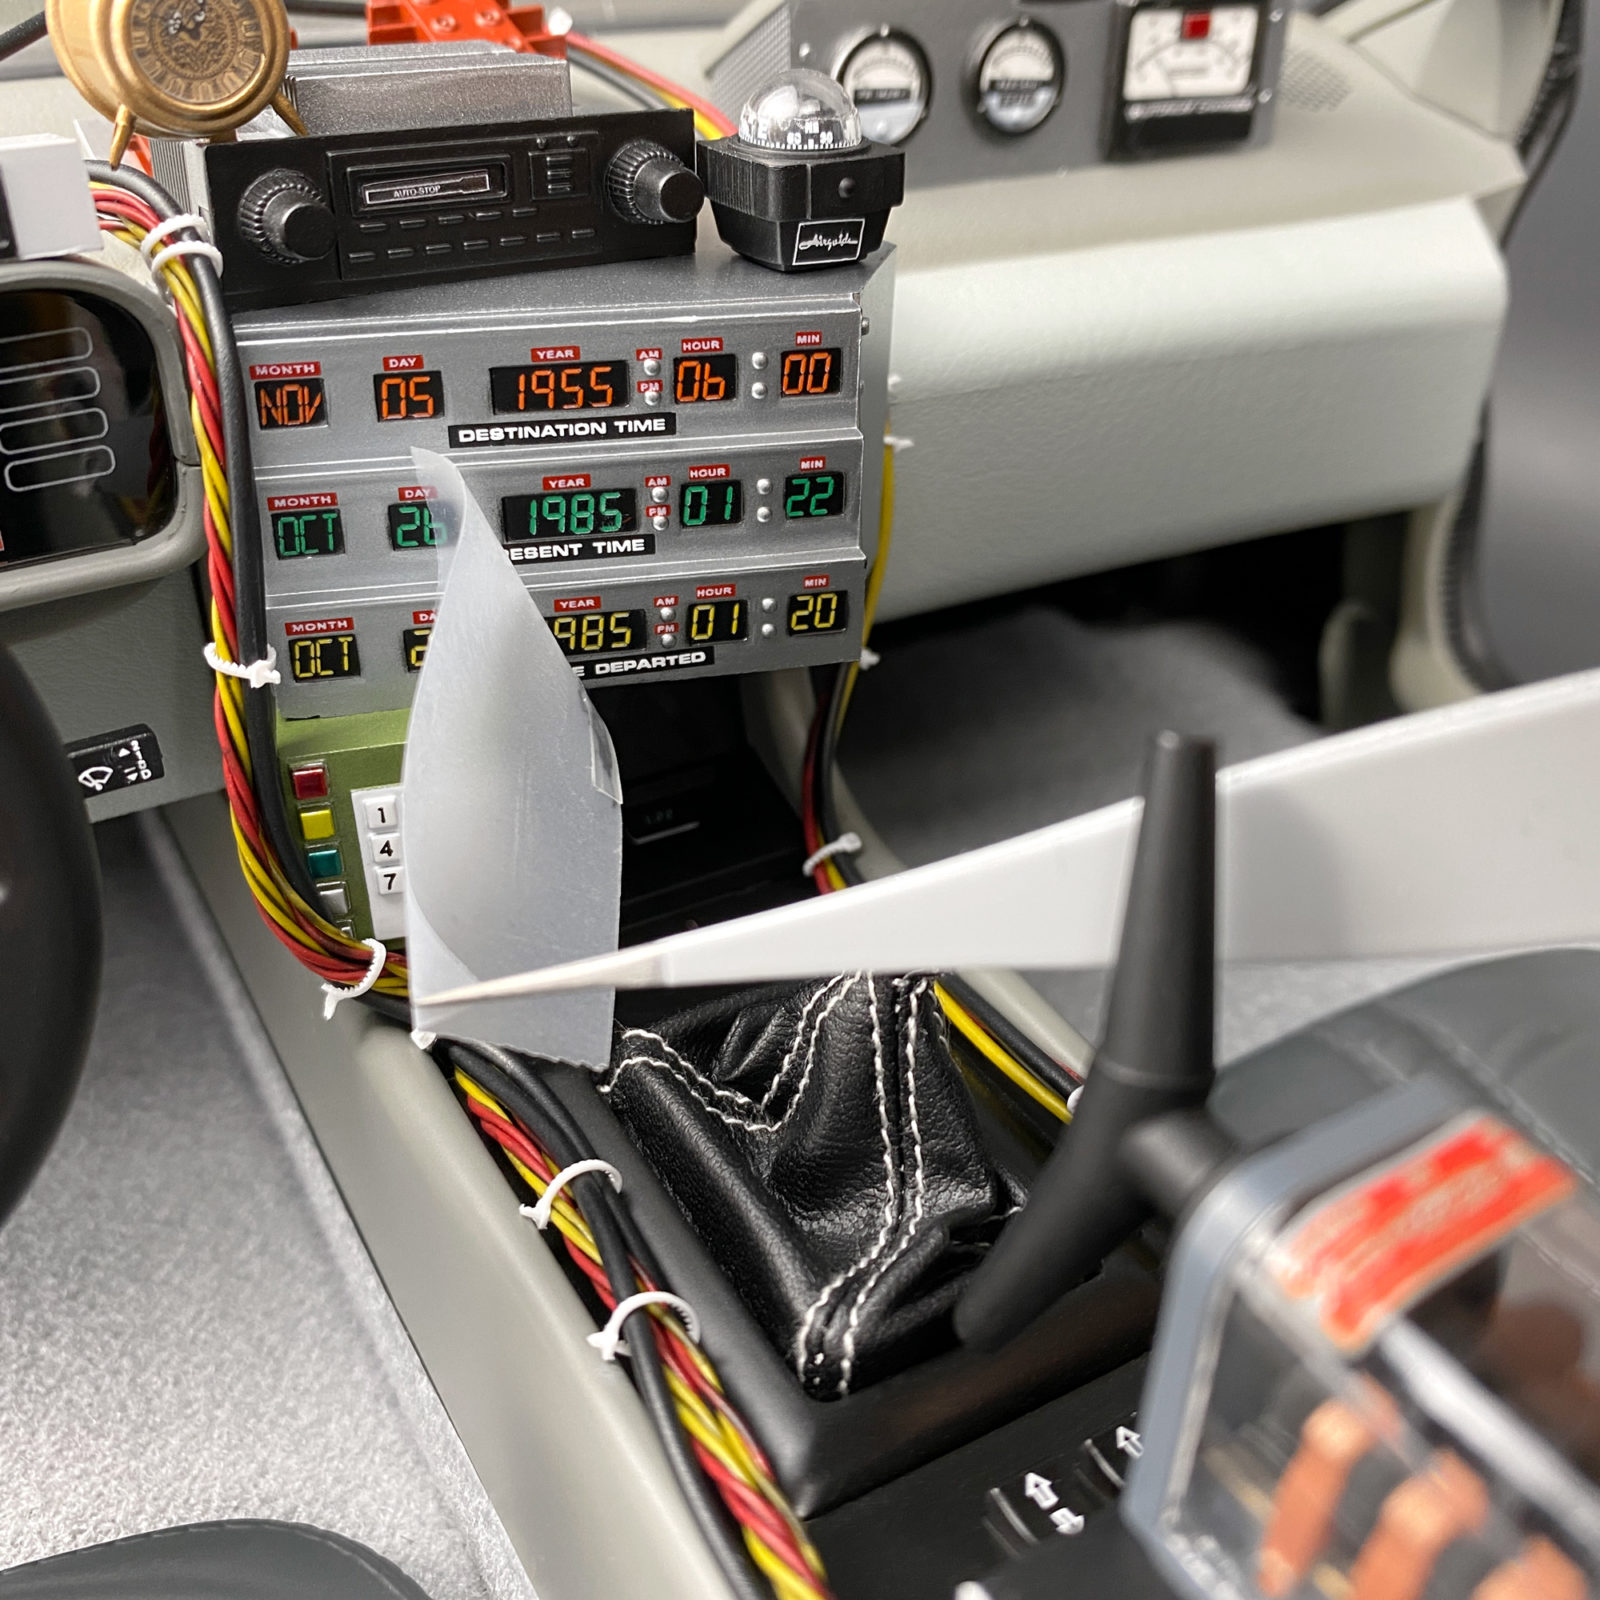 Applying Hot Toys DeLorean dash transfers